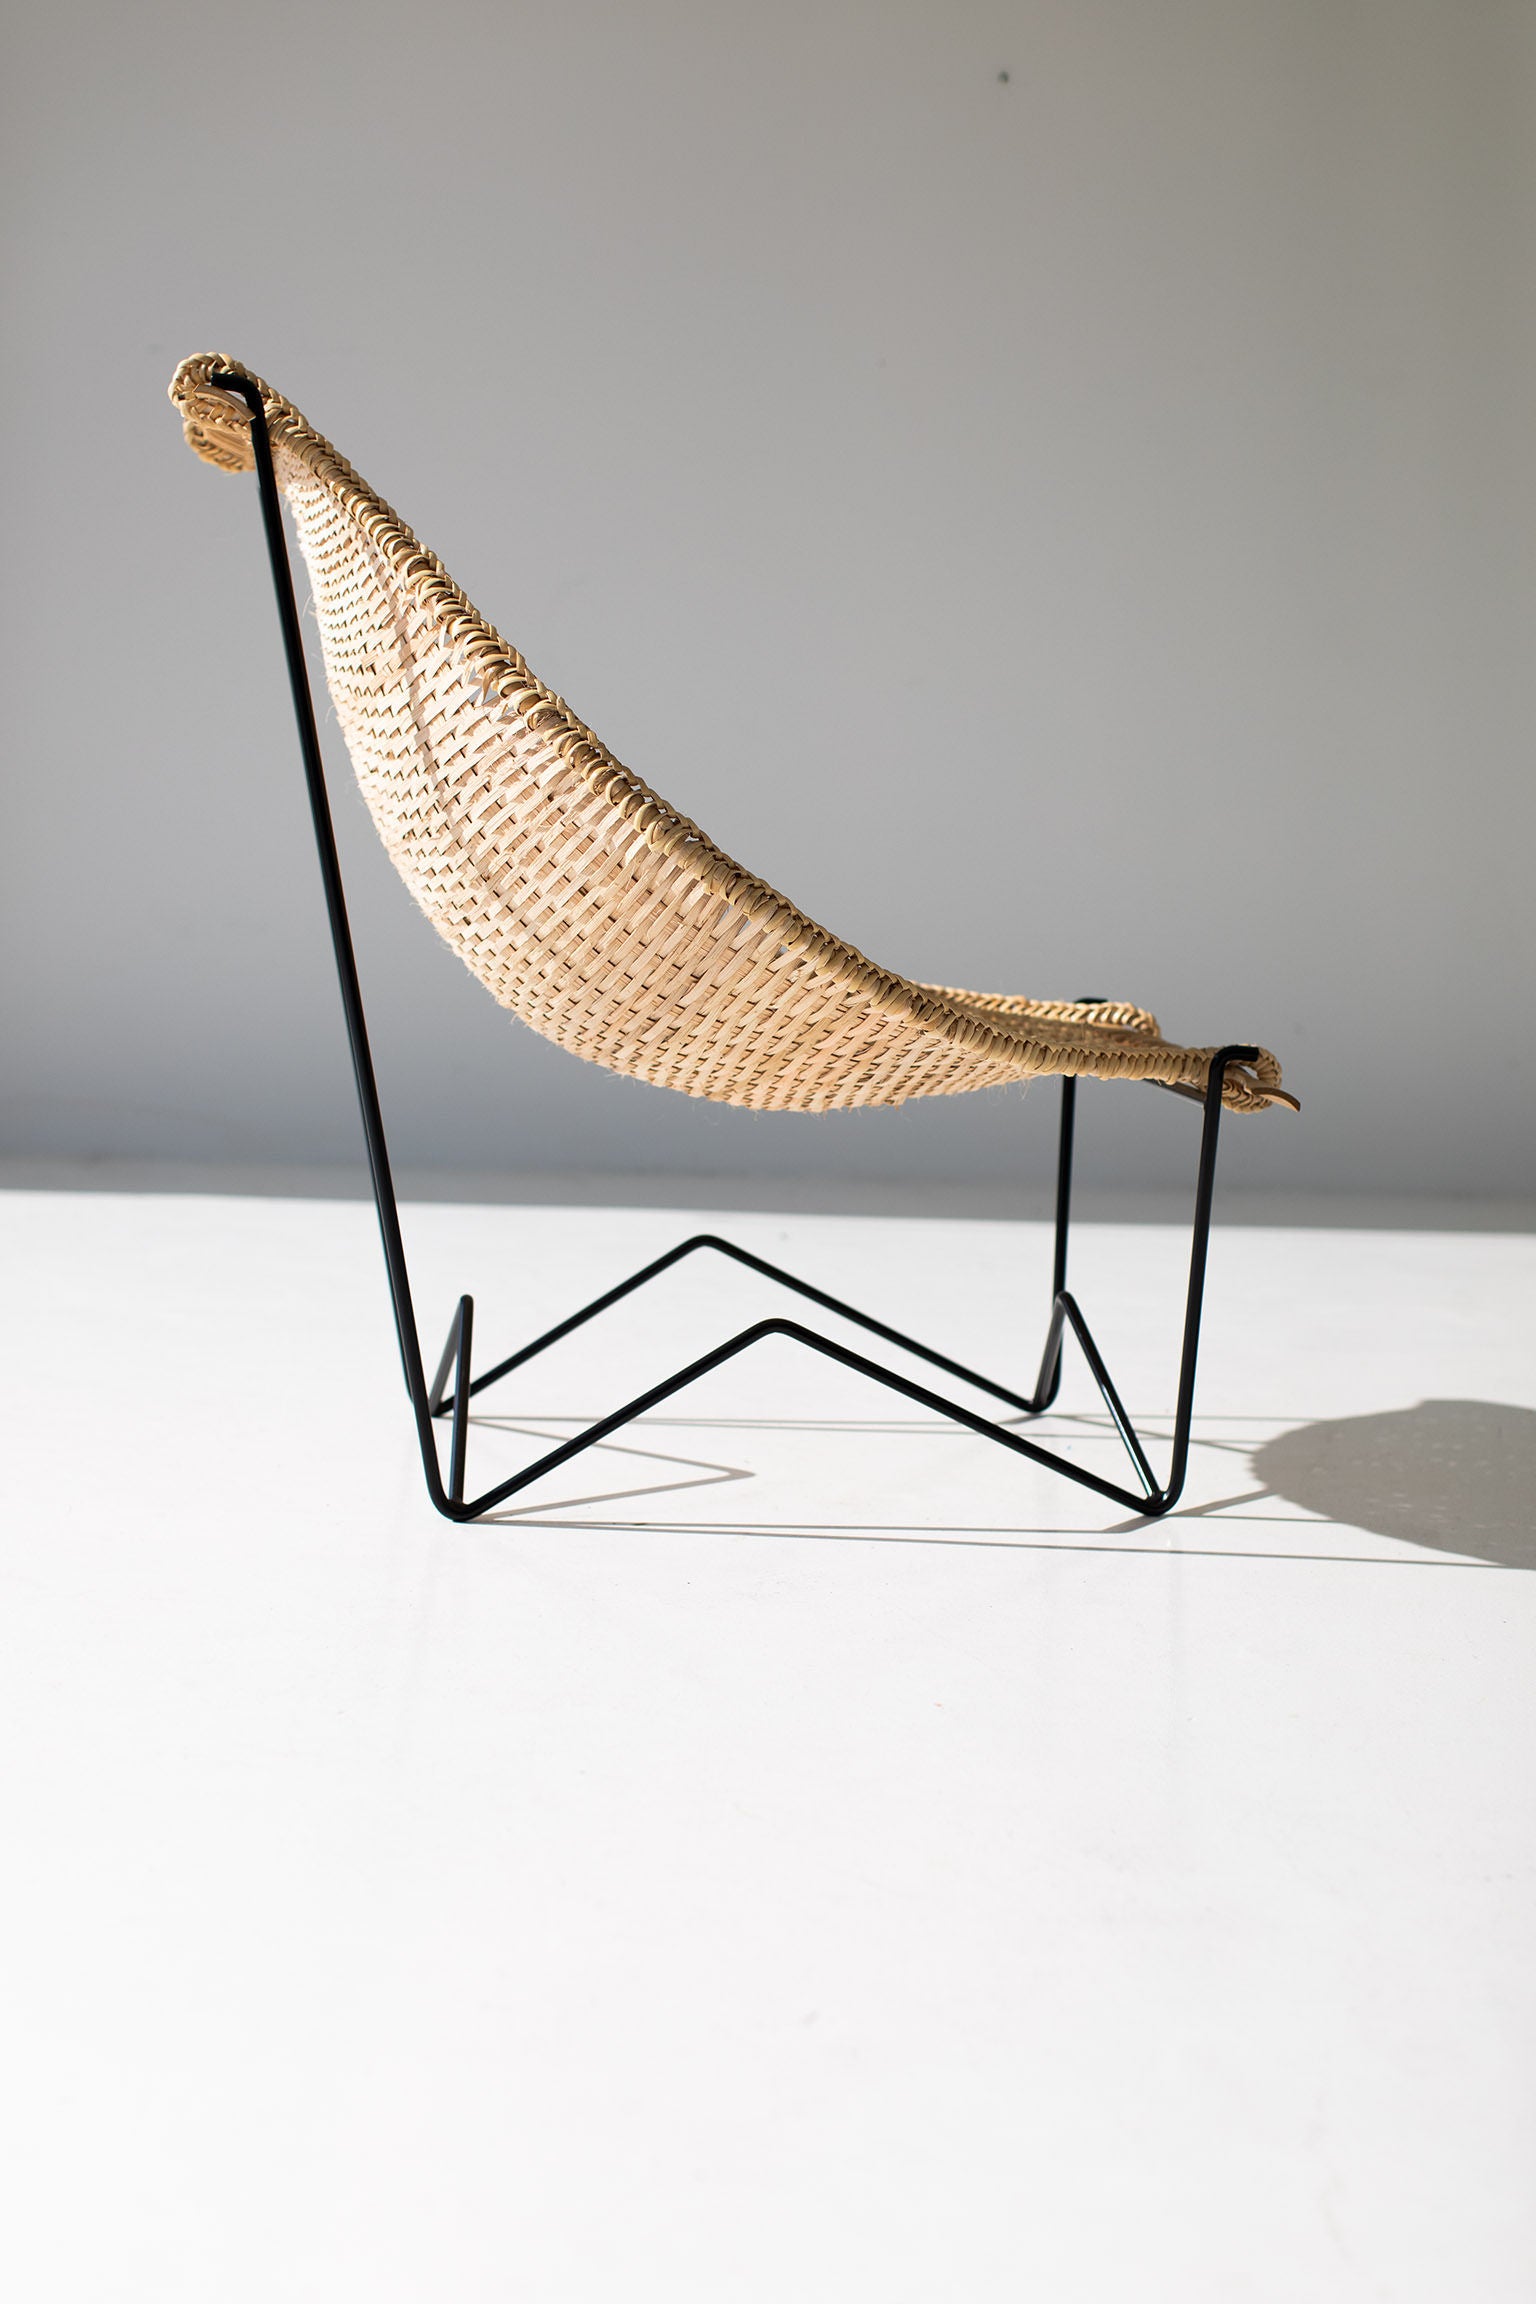 John Risley Duyan Chair for Craft Associates Furniture